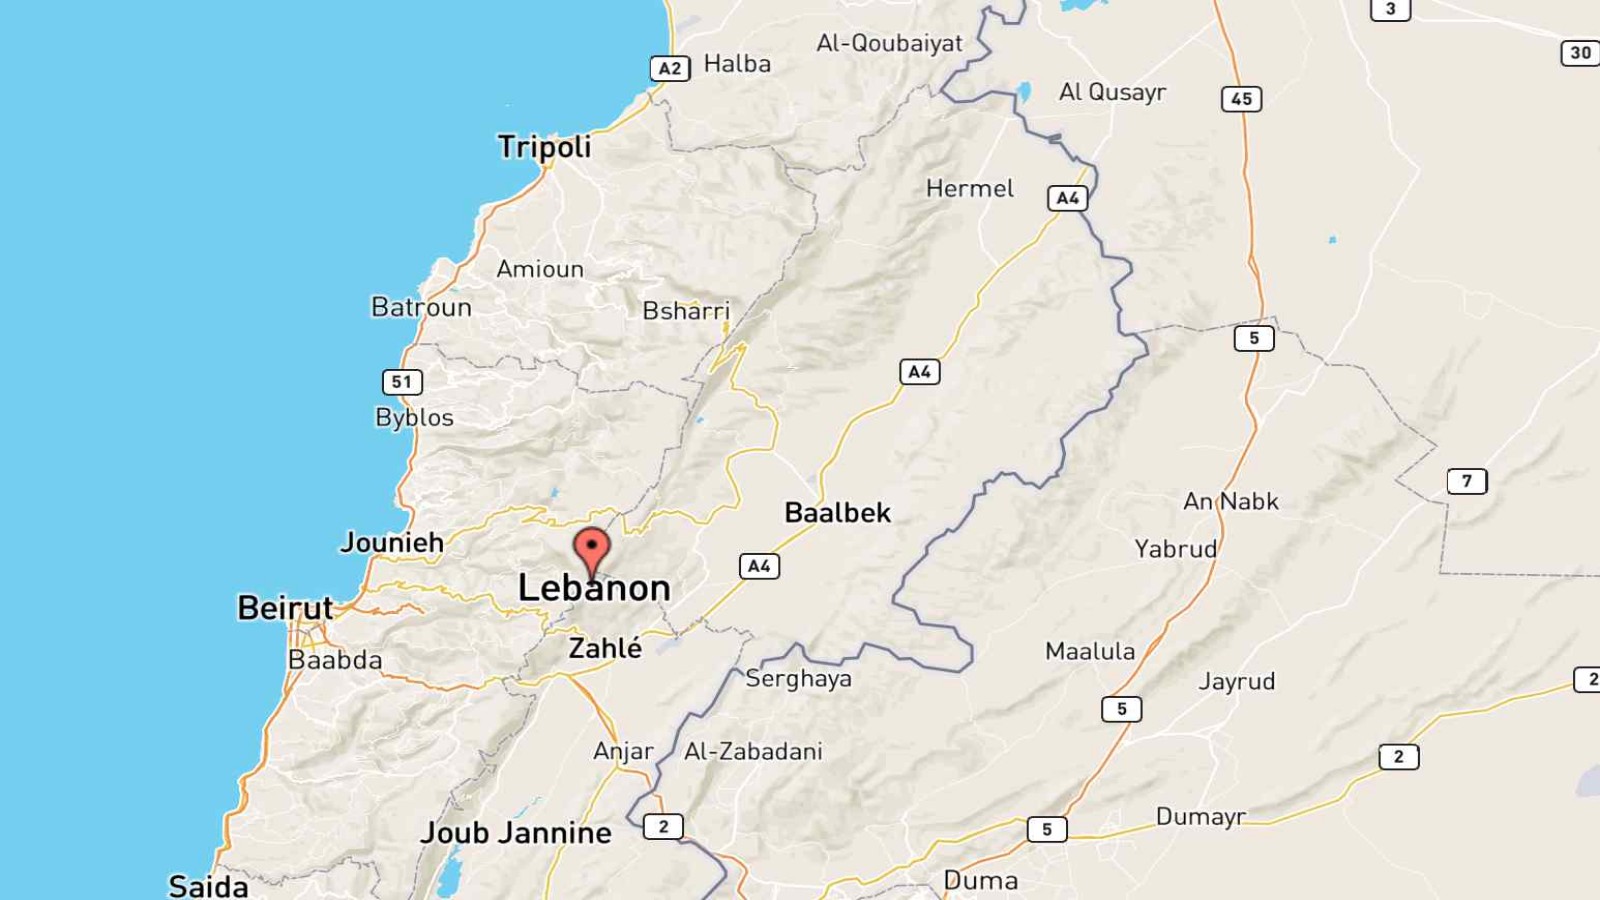 Mappa Libano cartina geografica